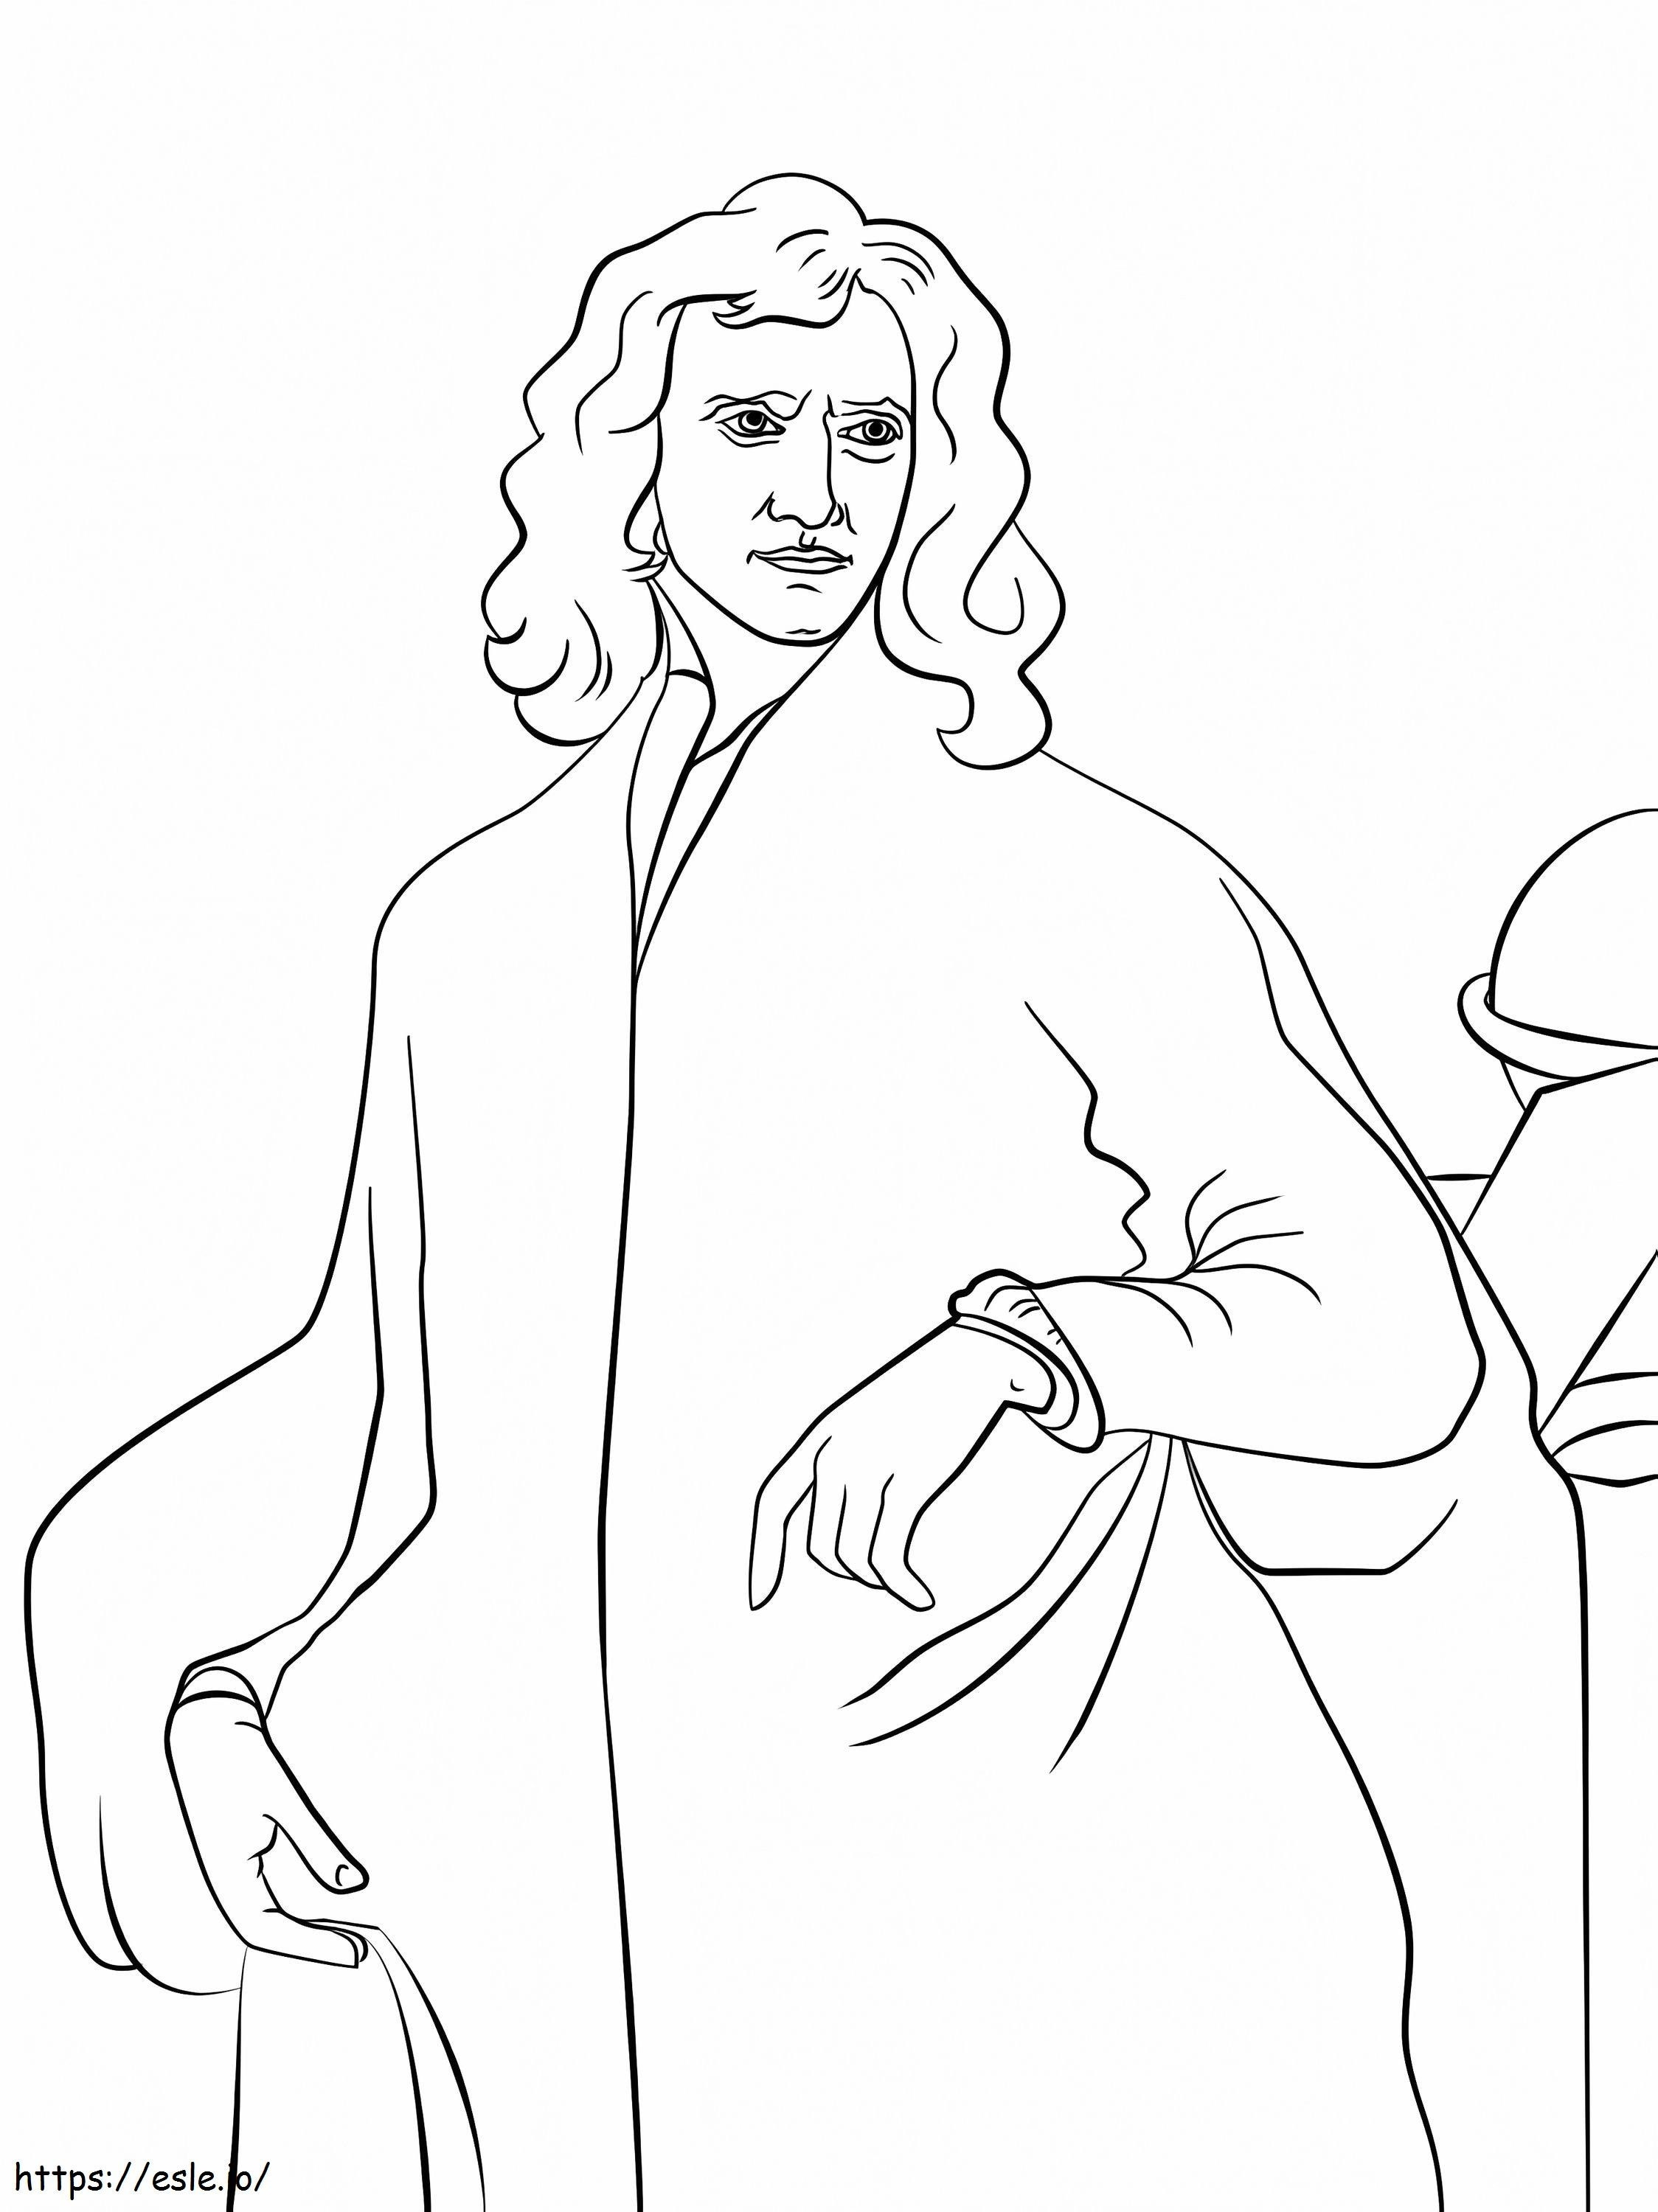 Herr Isaac Newton ausmalbilder